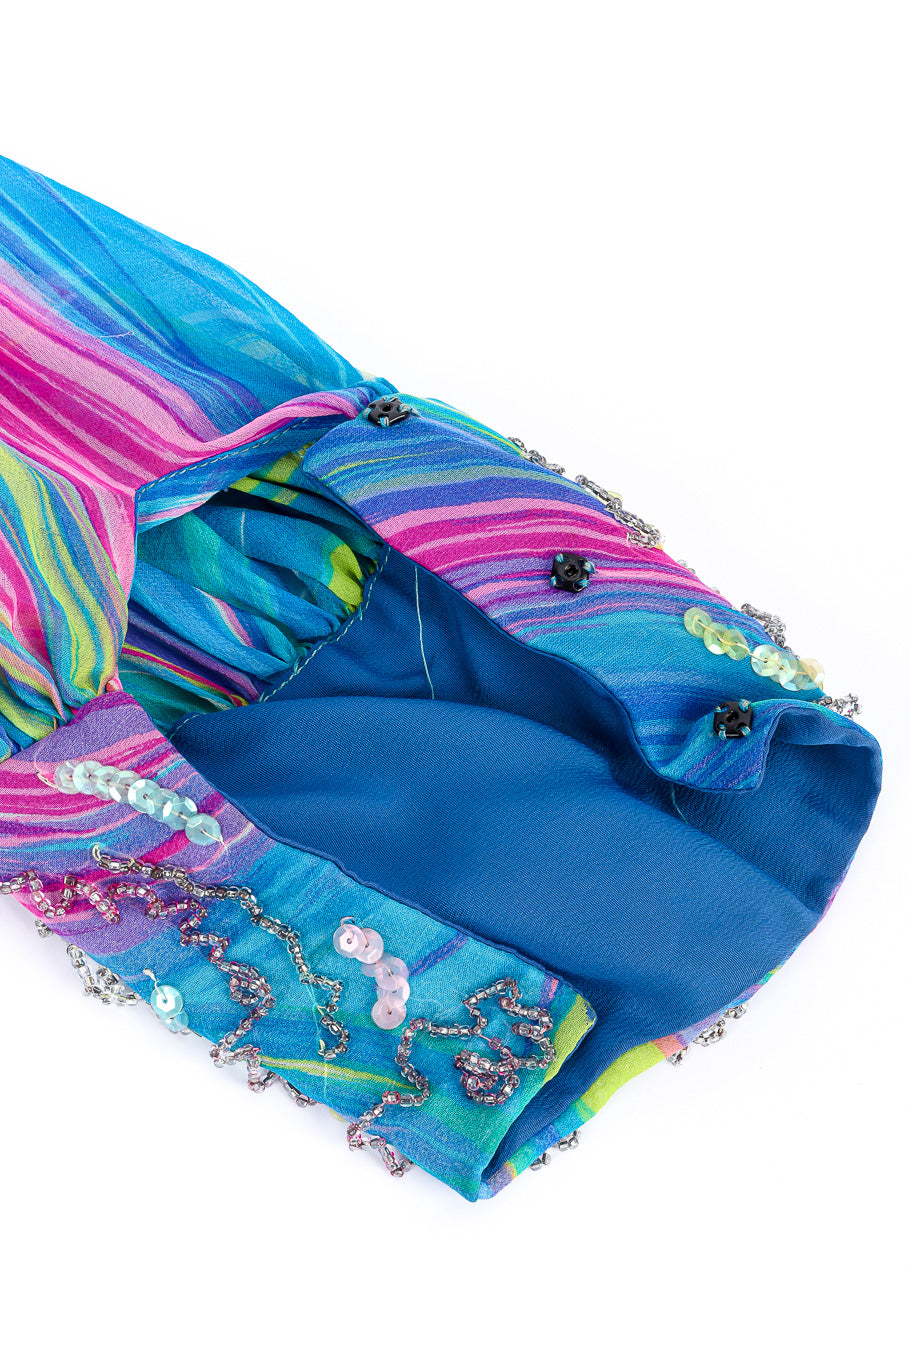 Vintage Mr. Frank Abstract Swirl Silk Dress single snap buttons on cuff closeup @Recessla